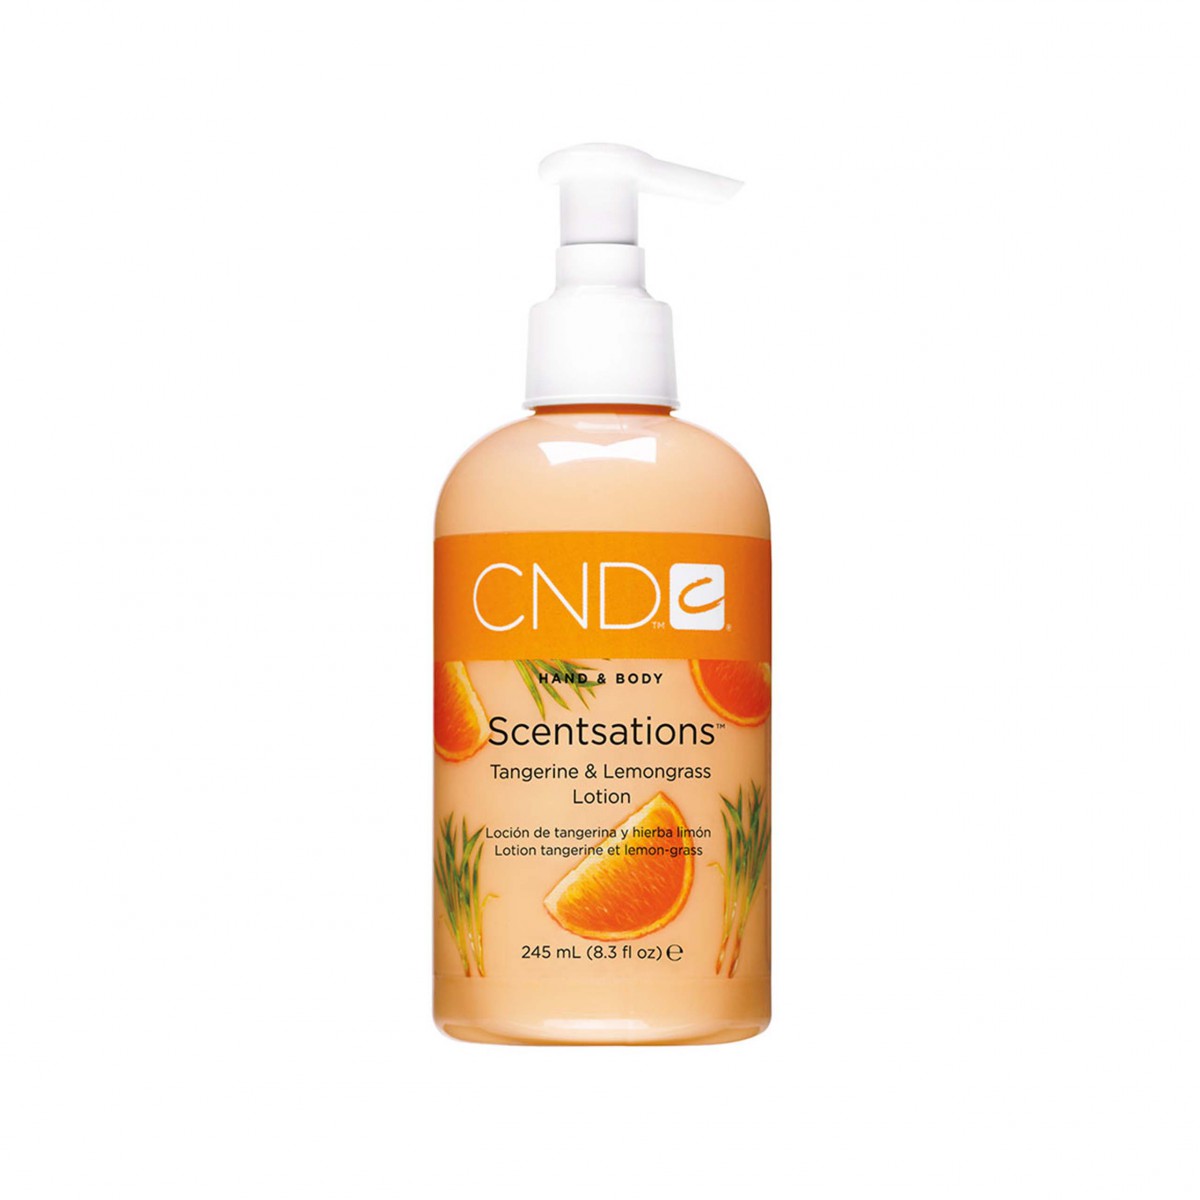 Tangerine & lemongrass - CND Scentsations Lotion 245 ml